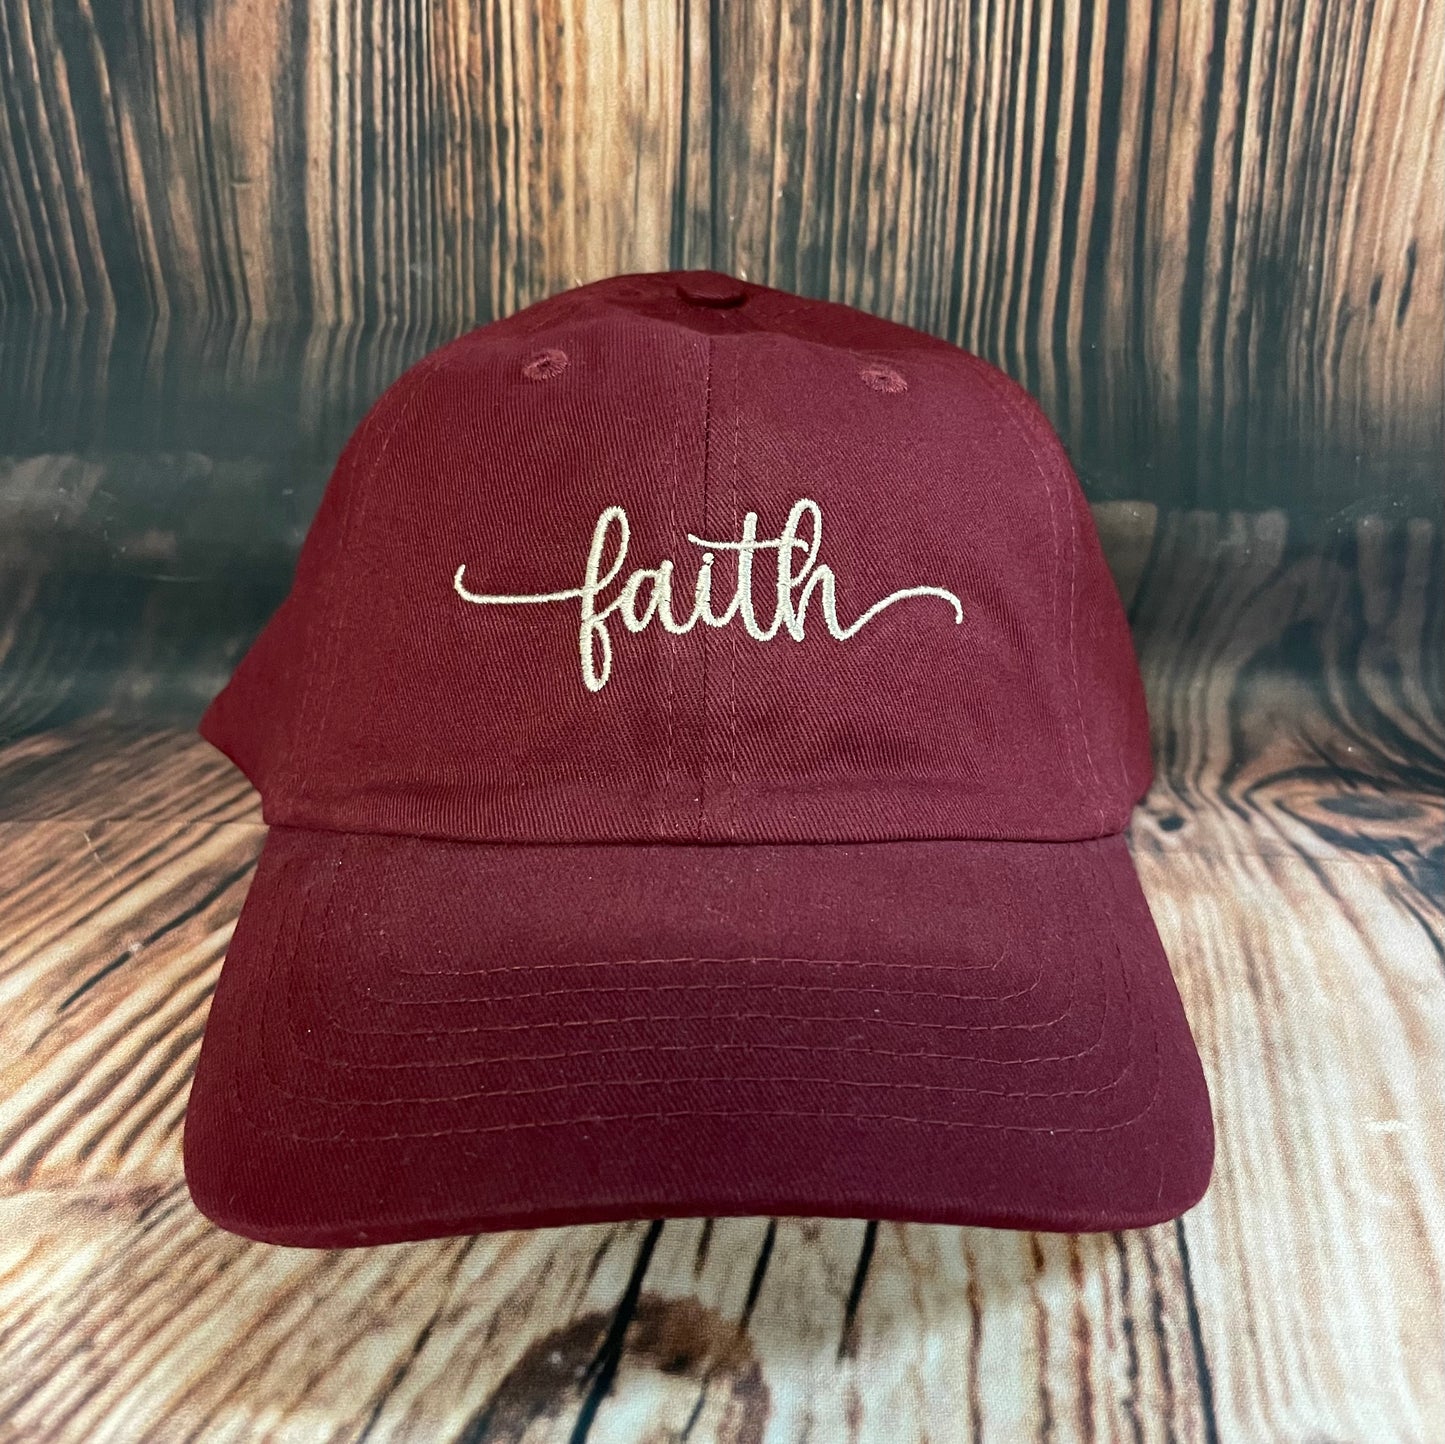 Faith embroidered hat, maroon